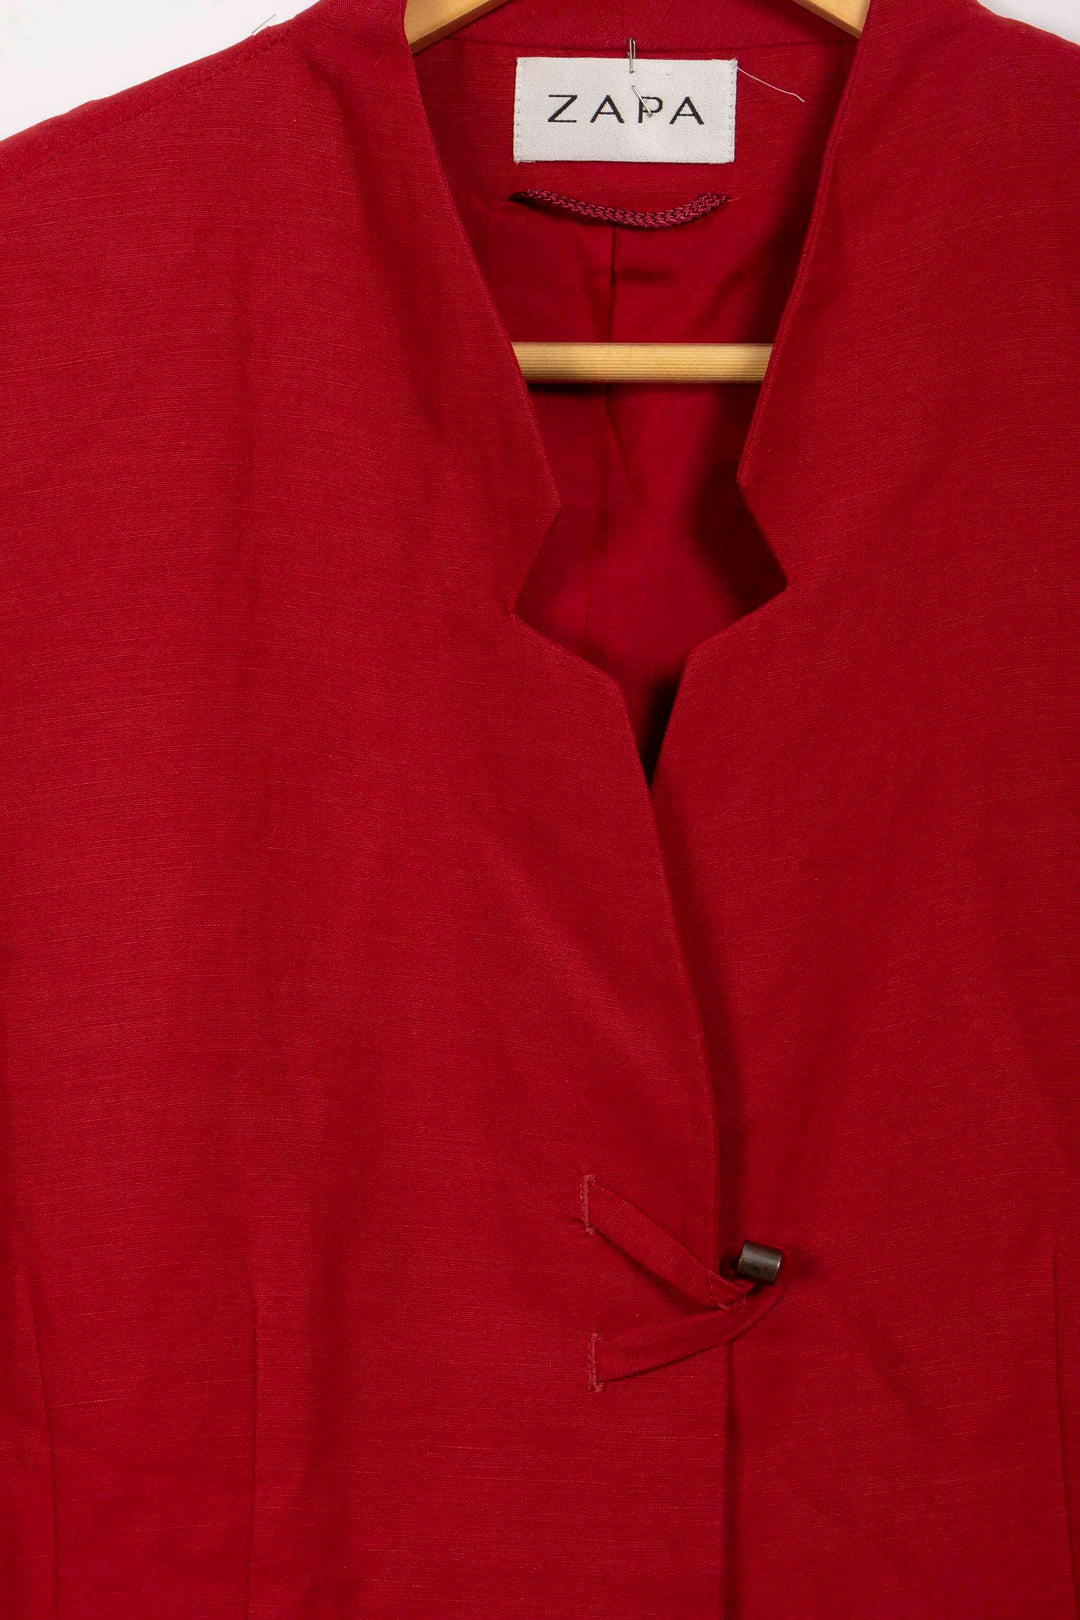 ZAPA red jacket - 44